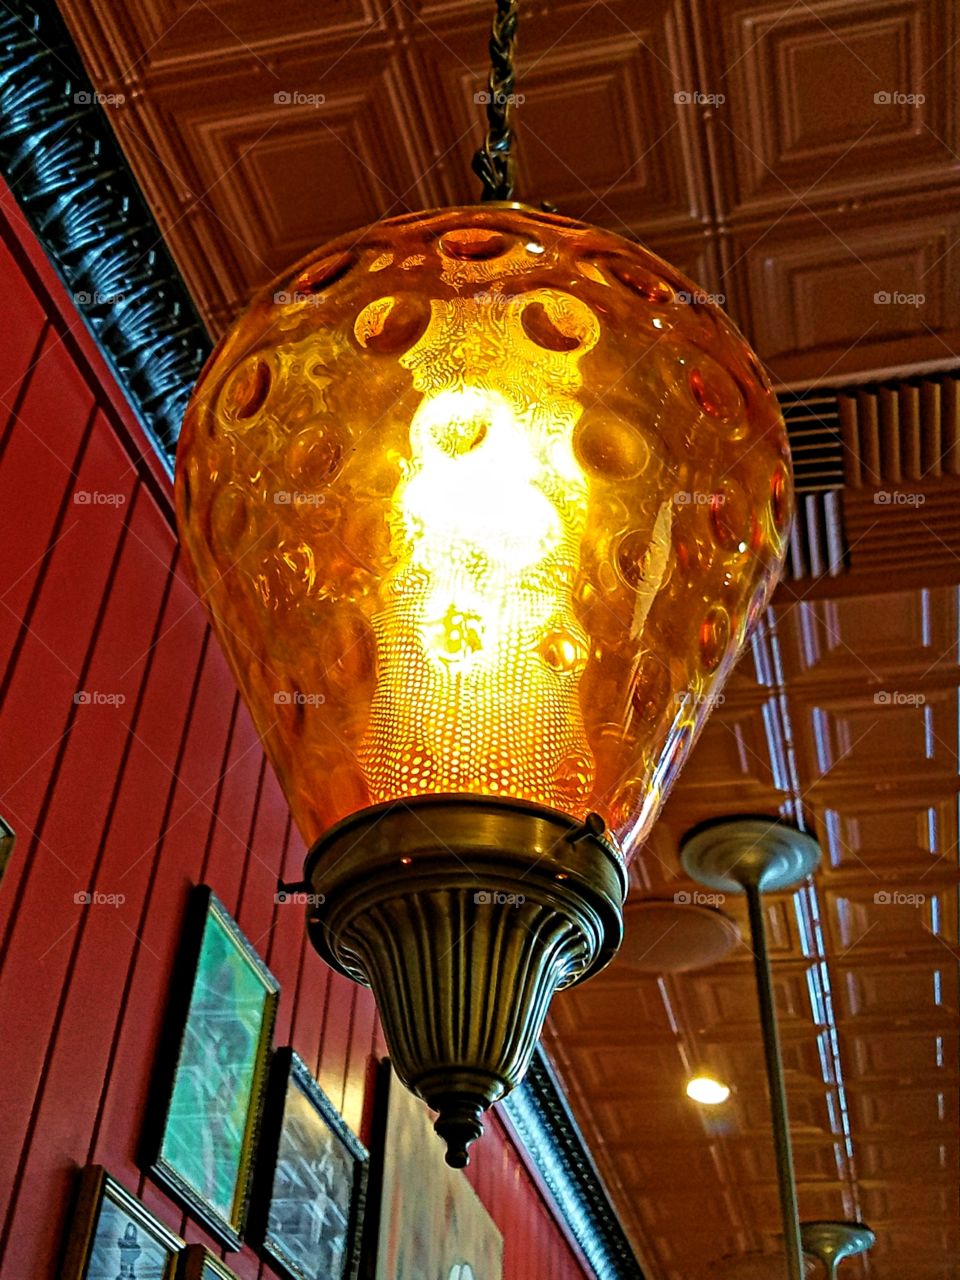 Hanging amber light fixture!